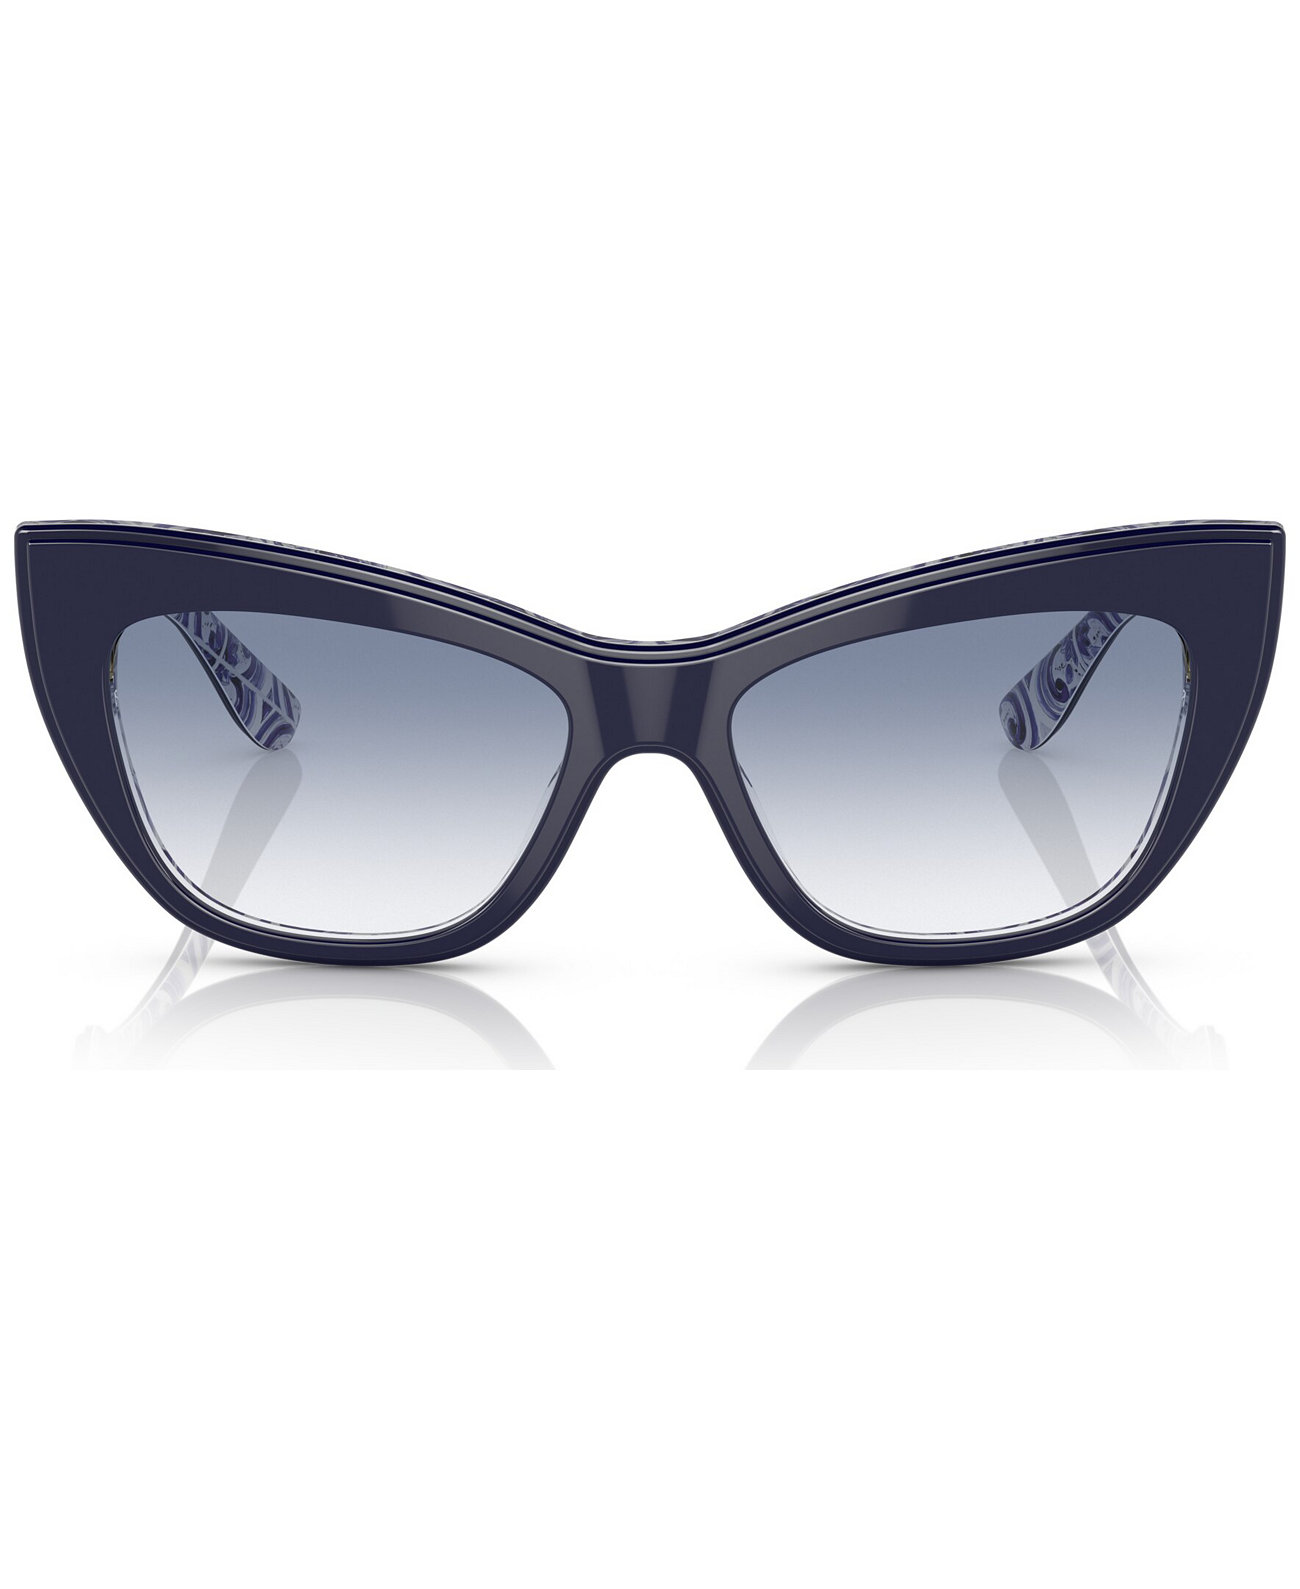 Women's Sunglasses, DG441754-Y Dolce & Gabbana